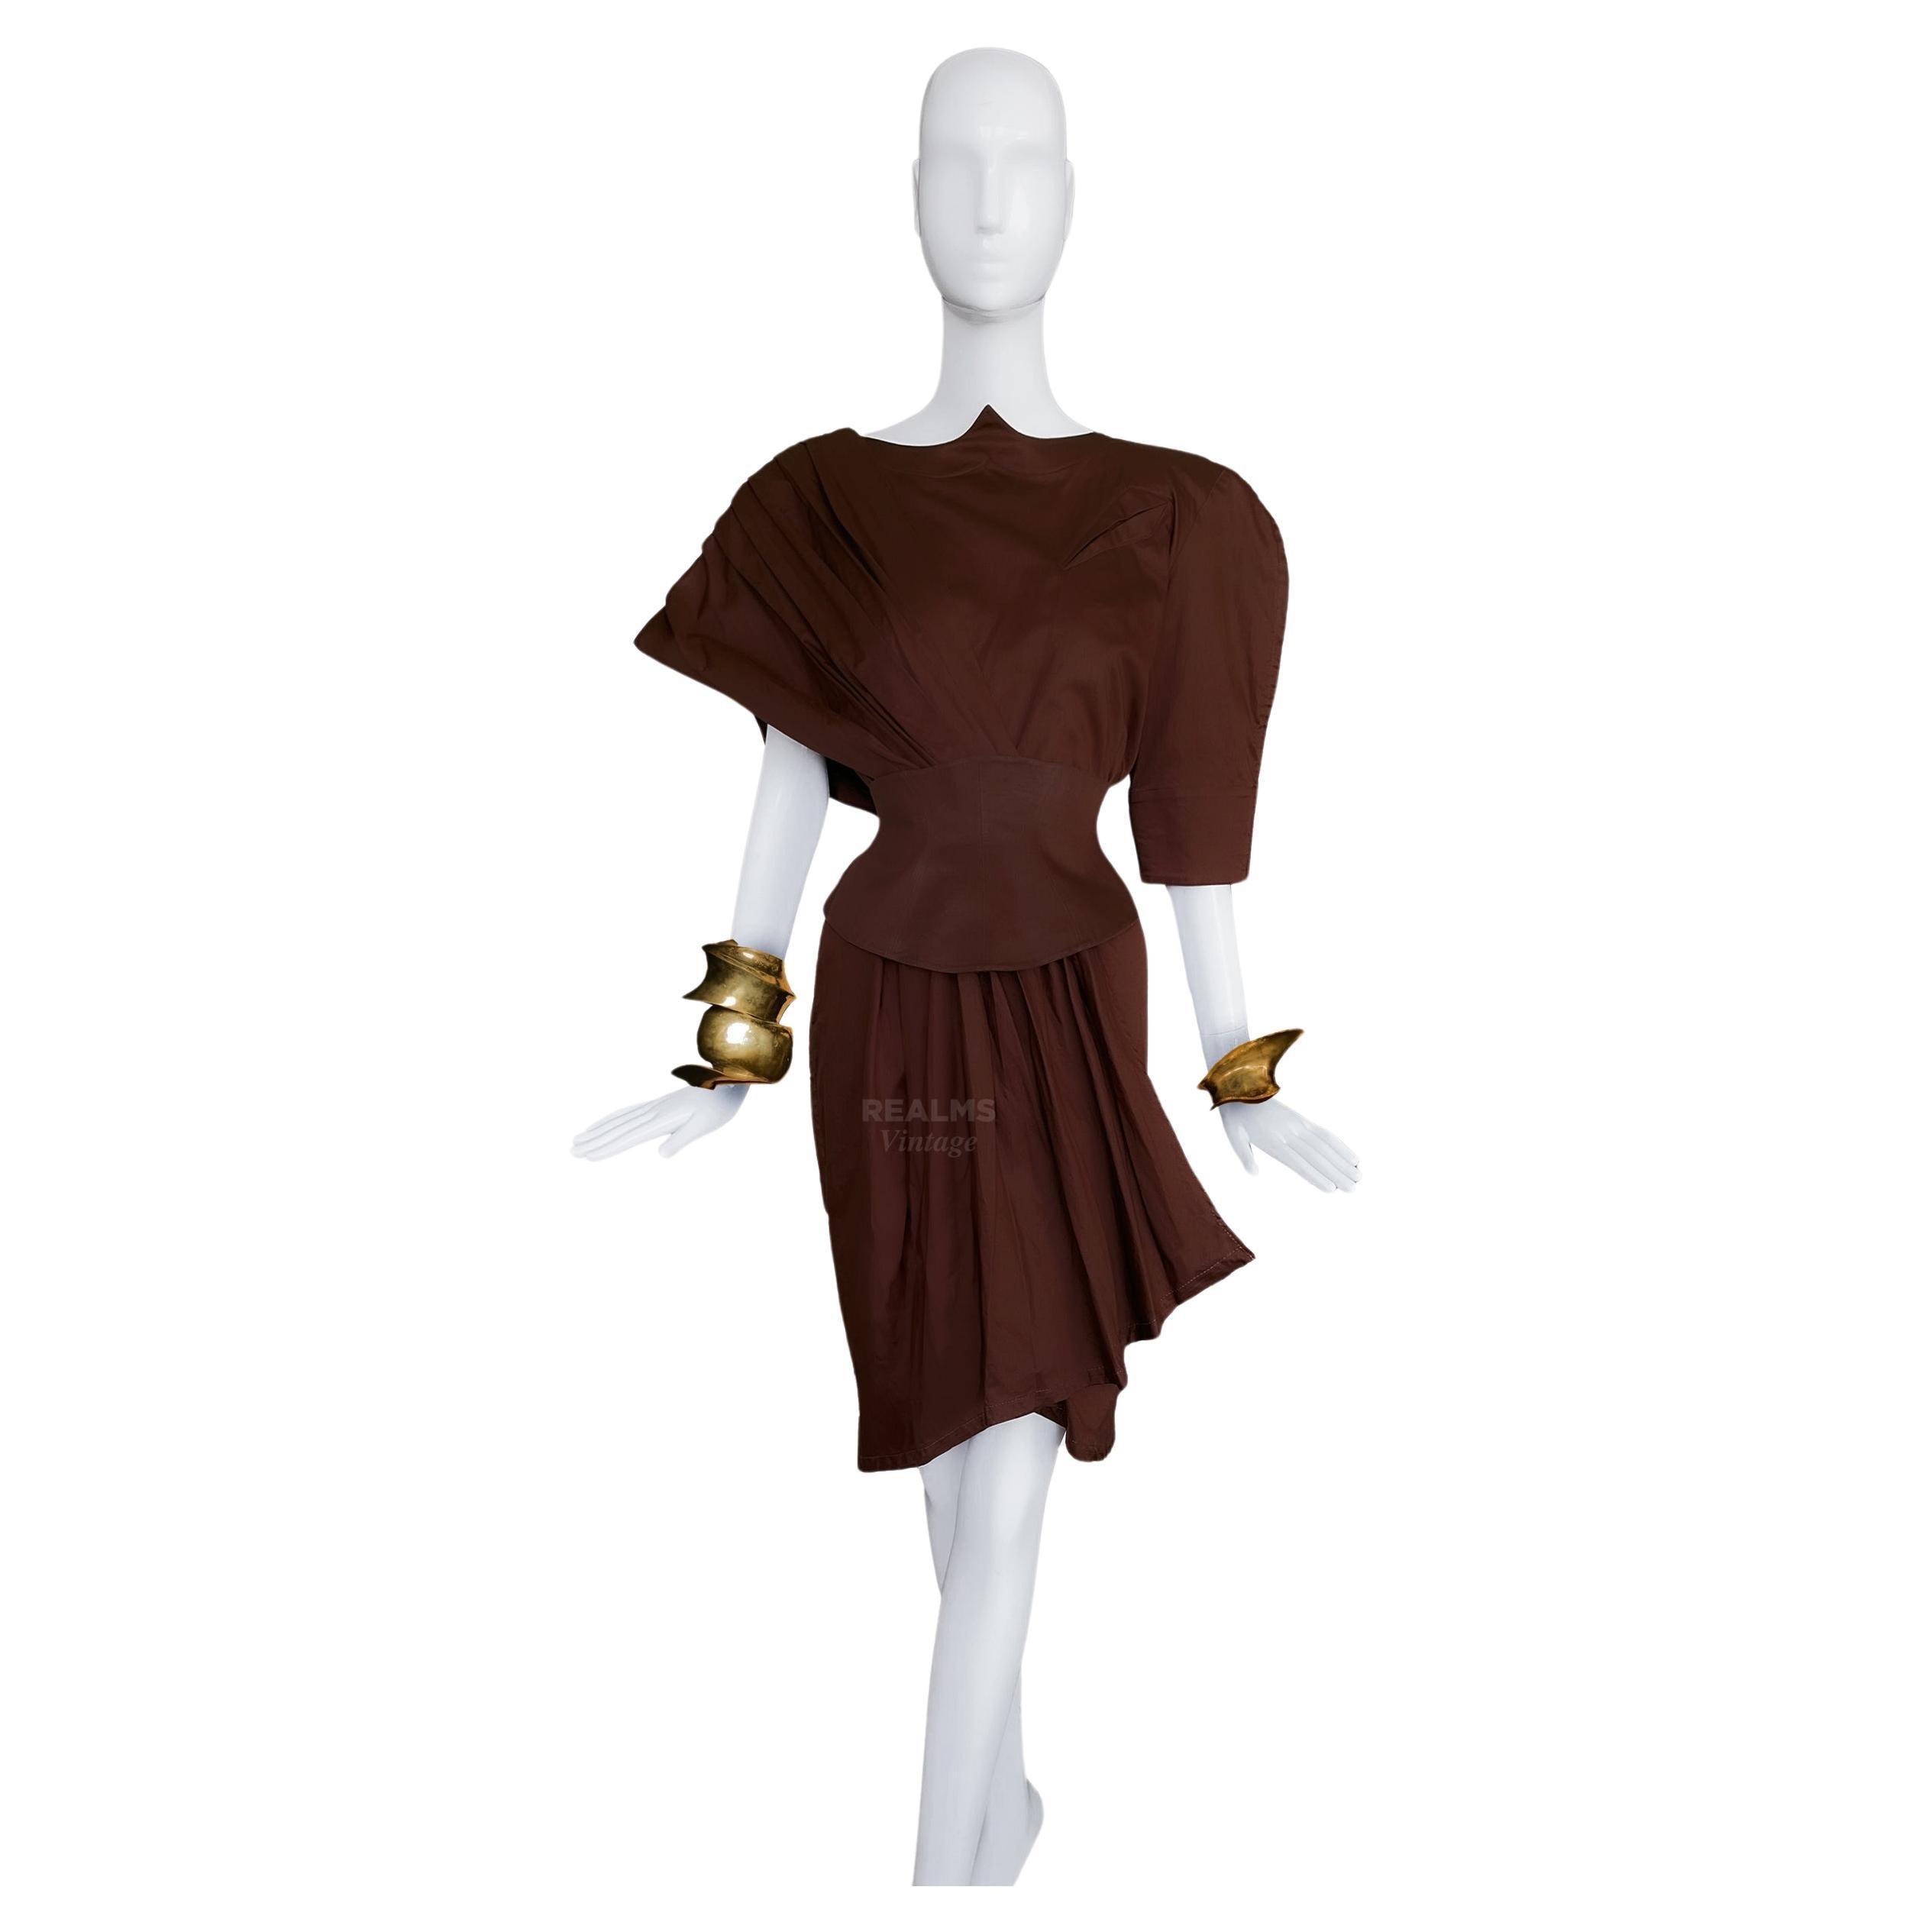 Thierry Mugler Goddess Dress Archival SS 1988 Sculptural Gown  For Sale